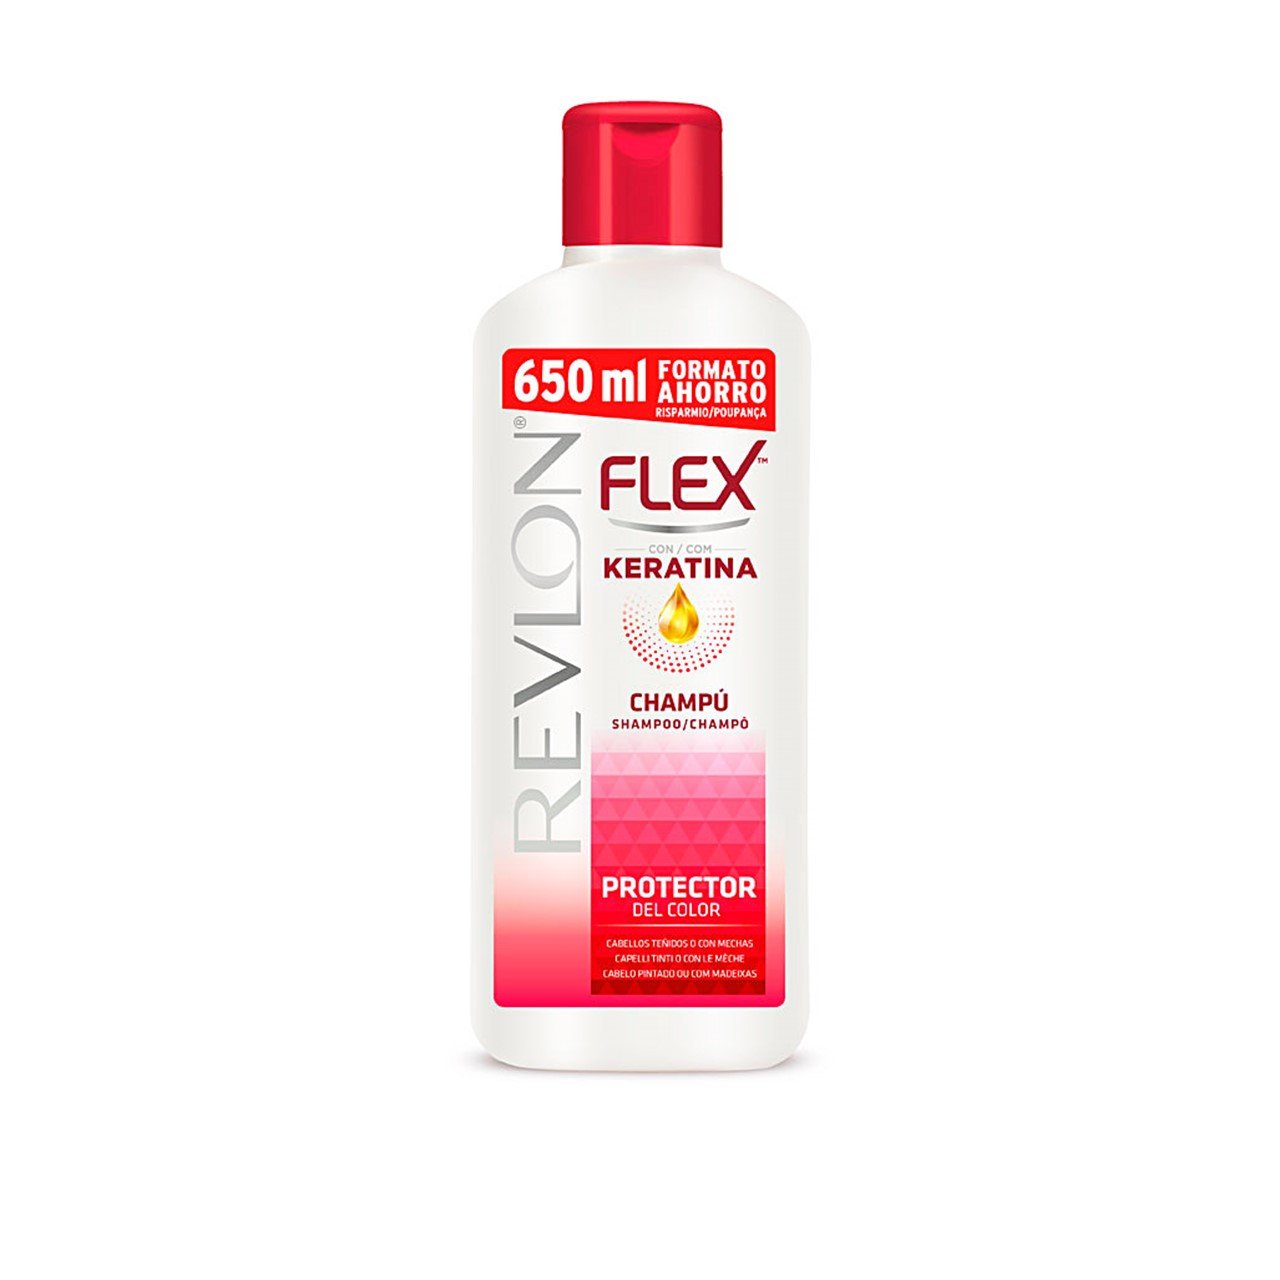 Revlon Flex Keratin Color Protection Shampoo 650ml (21.98fl oz)